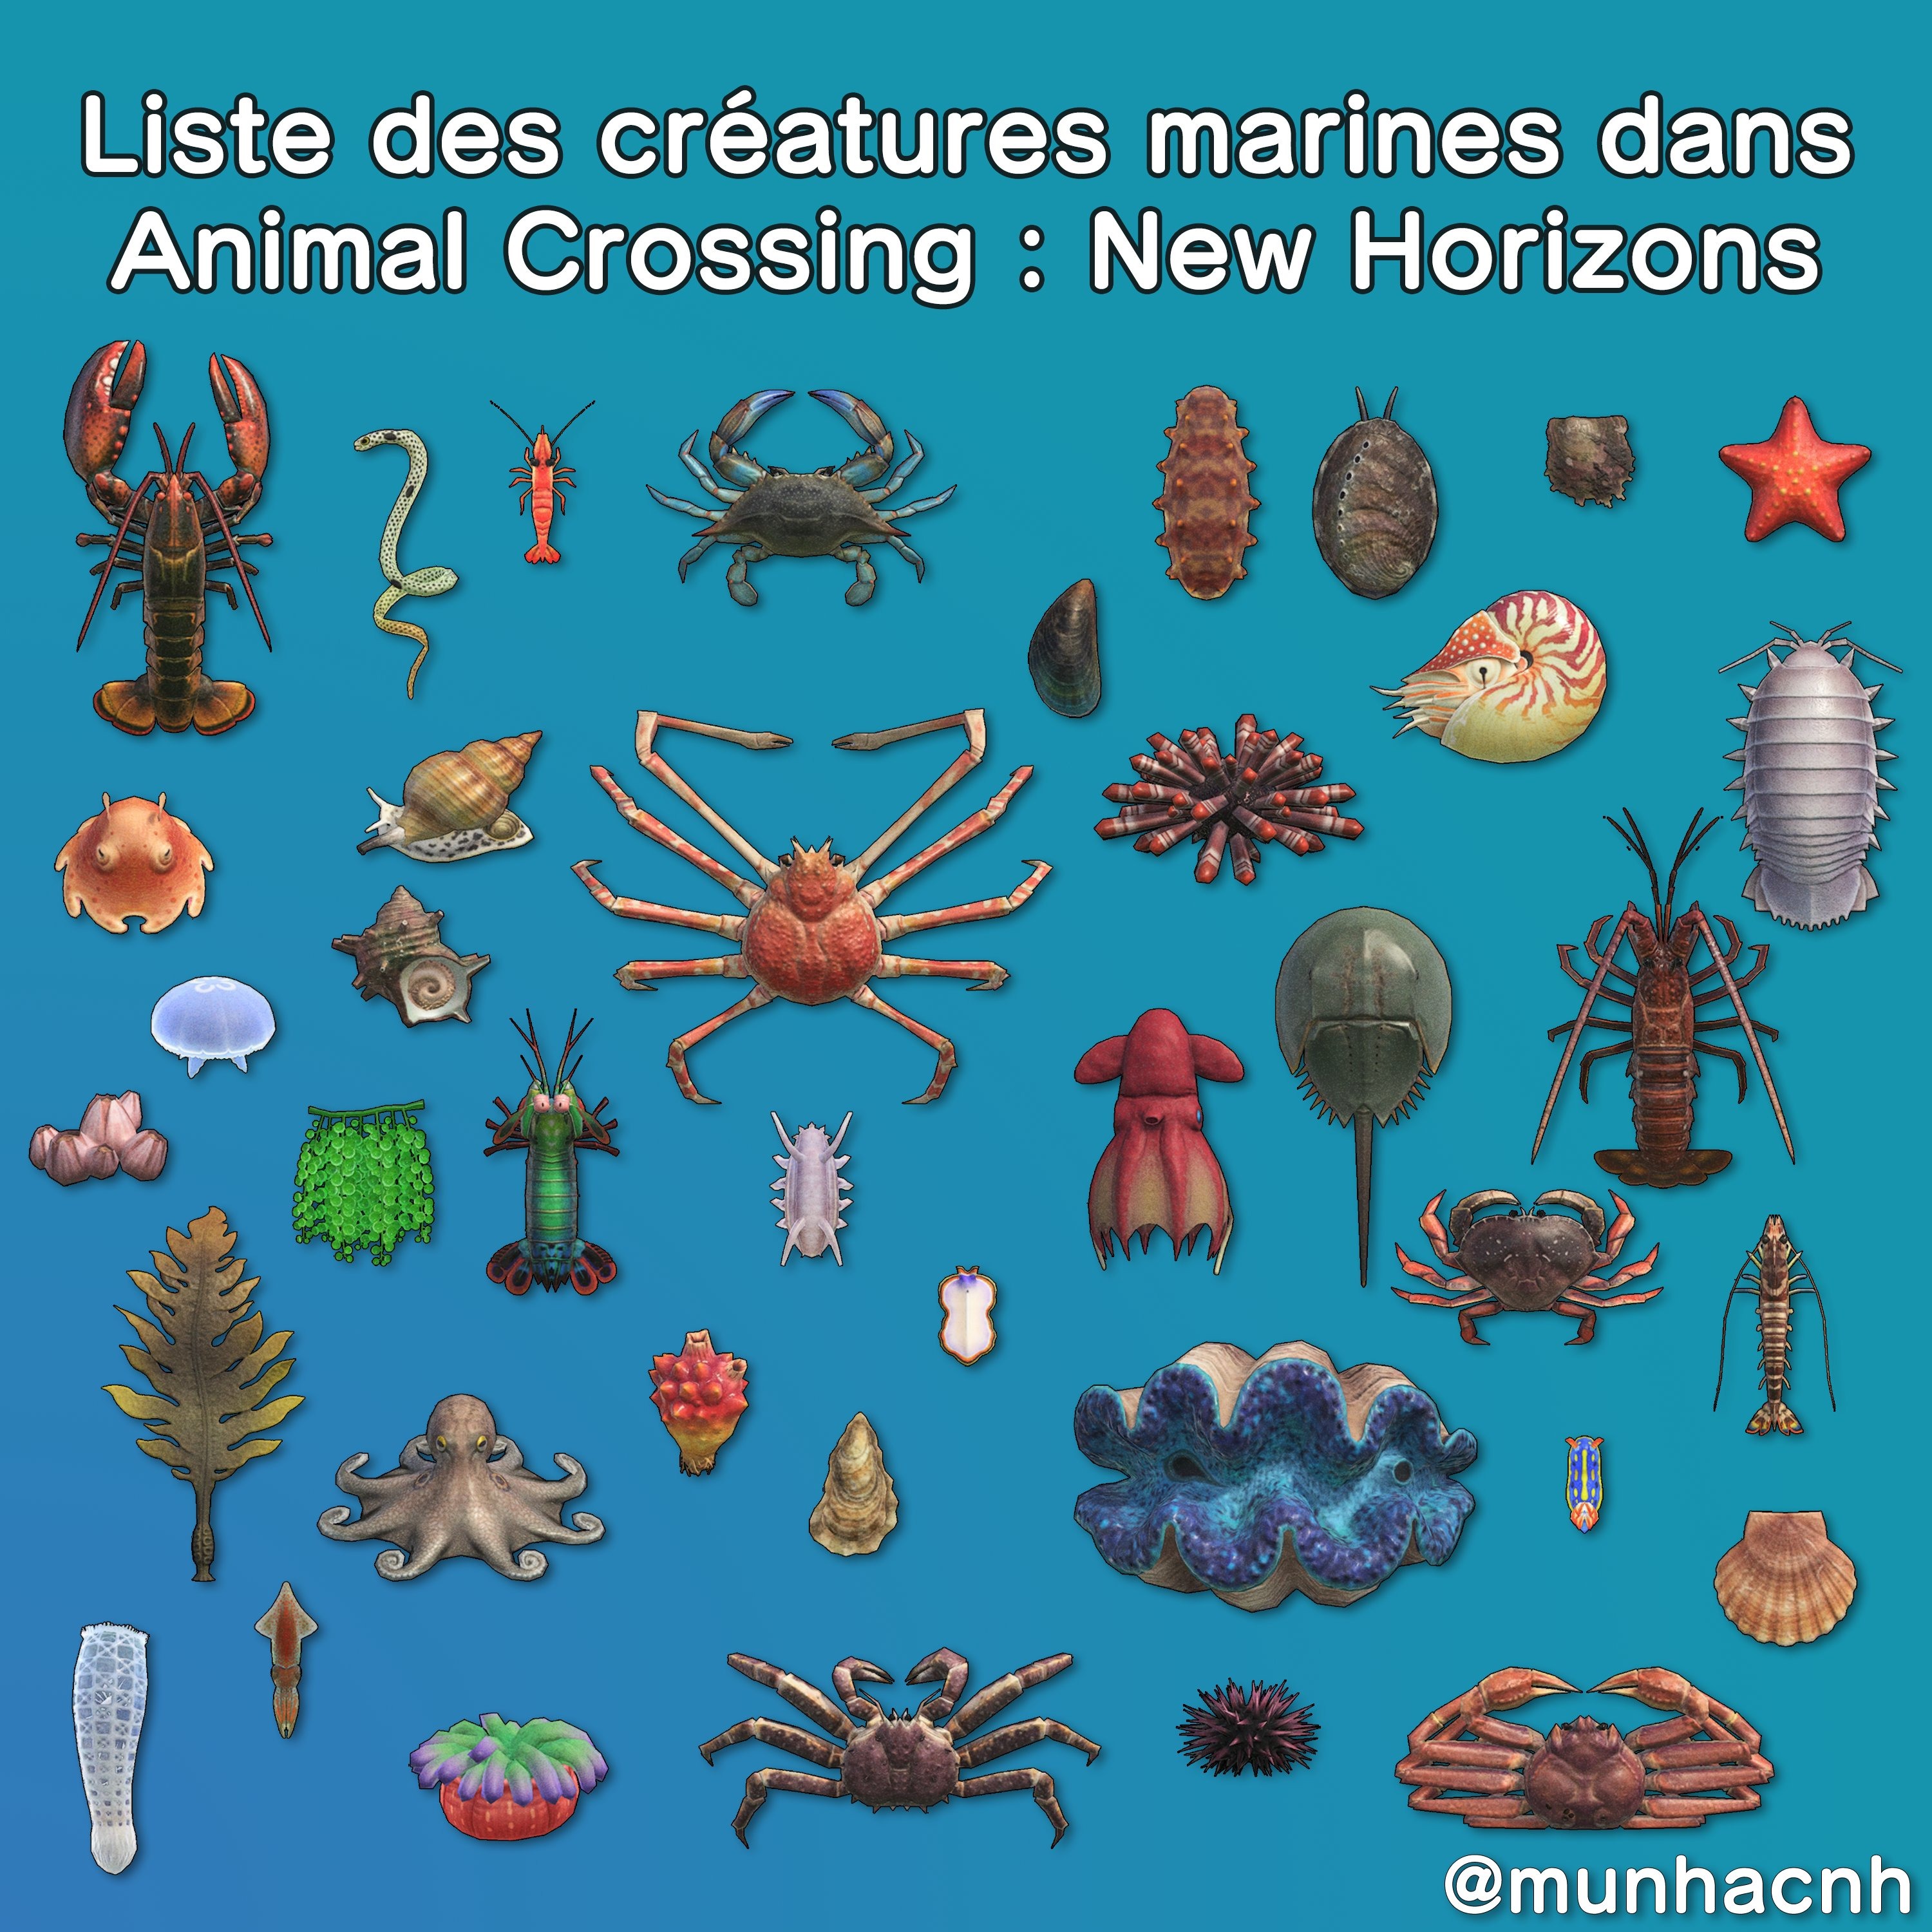 creatures-marines-animal-crossing-new-horizons